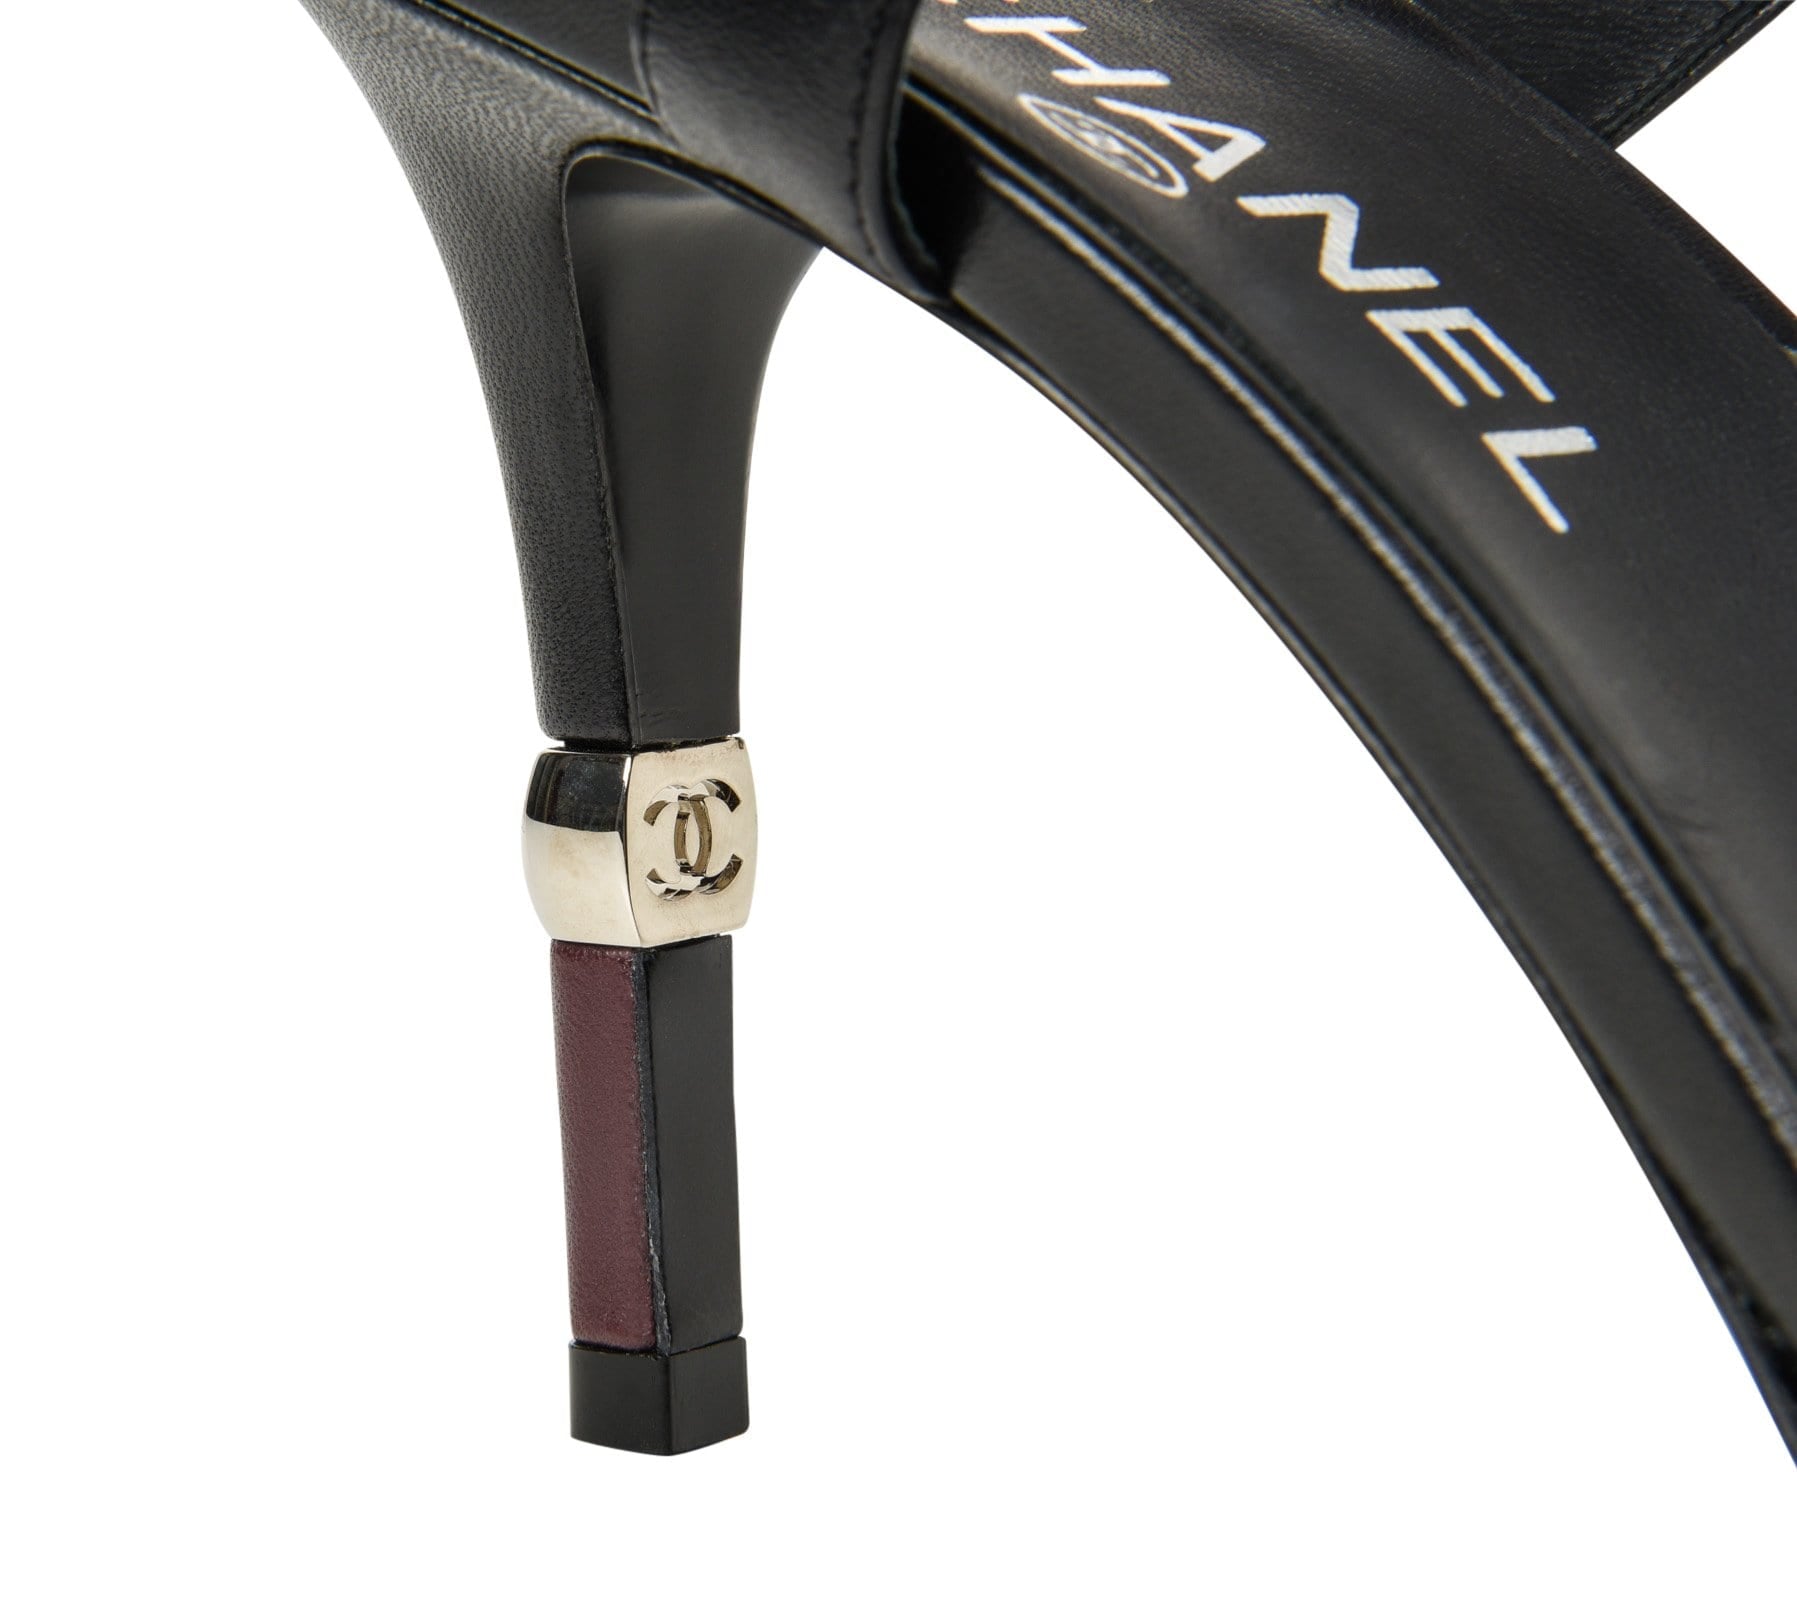 Chanel Shoe Black Leather Beautiful Heel Detail 40.5/ 10.5 - mightychic